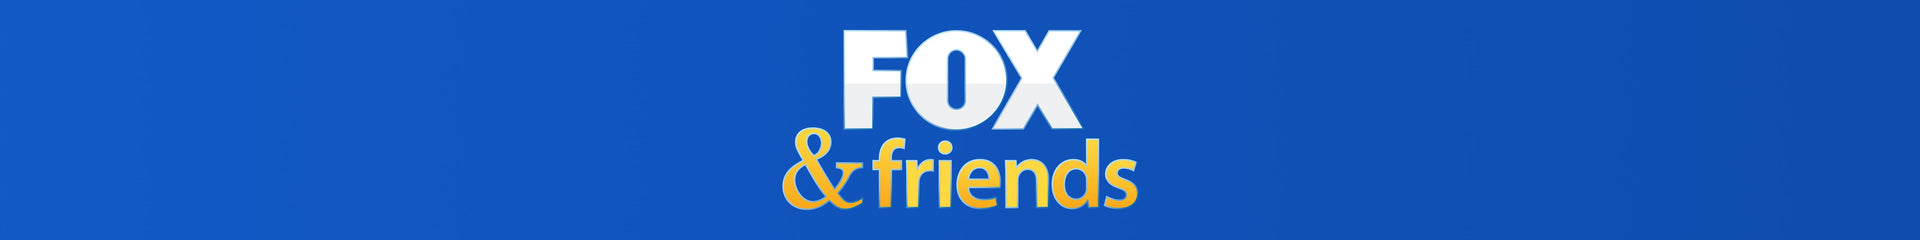 fox & friends-image